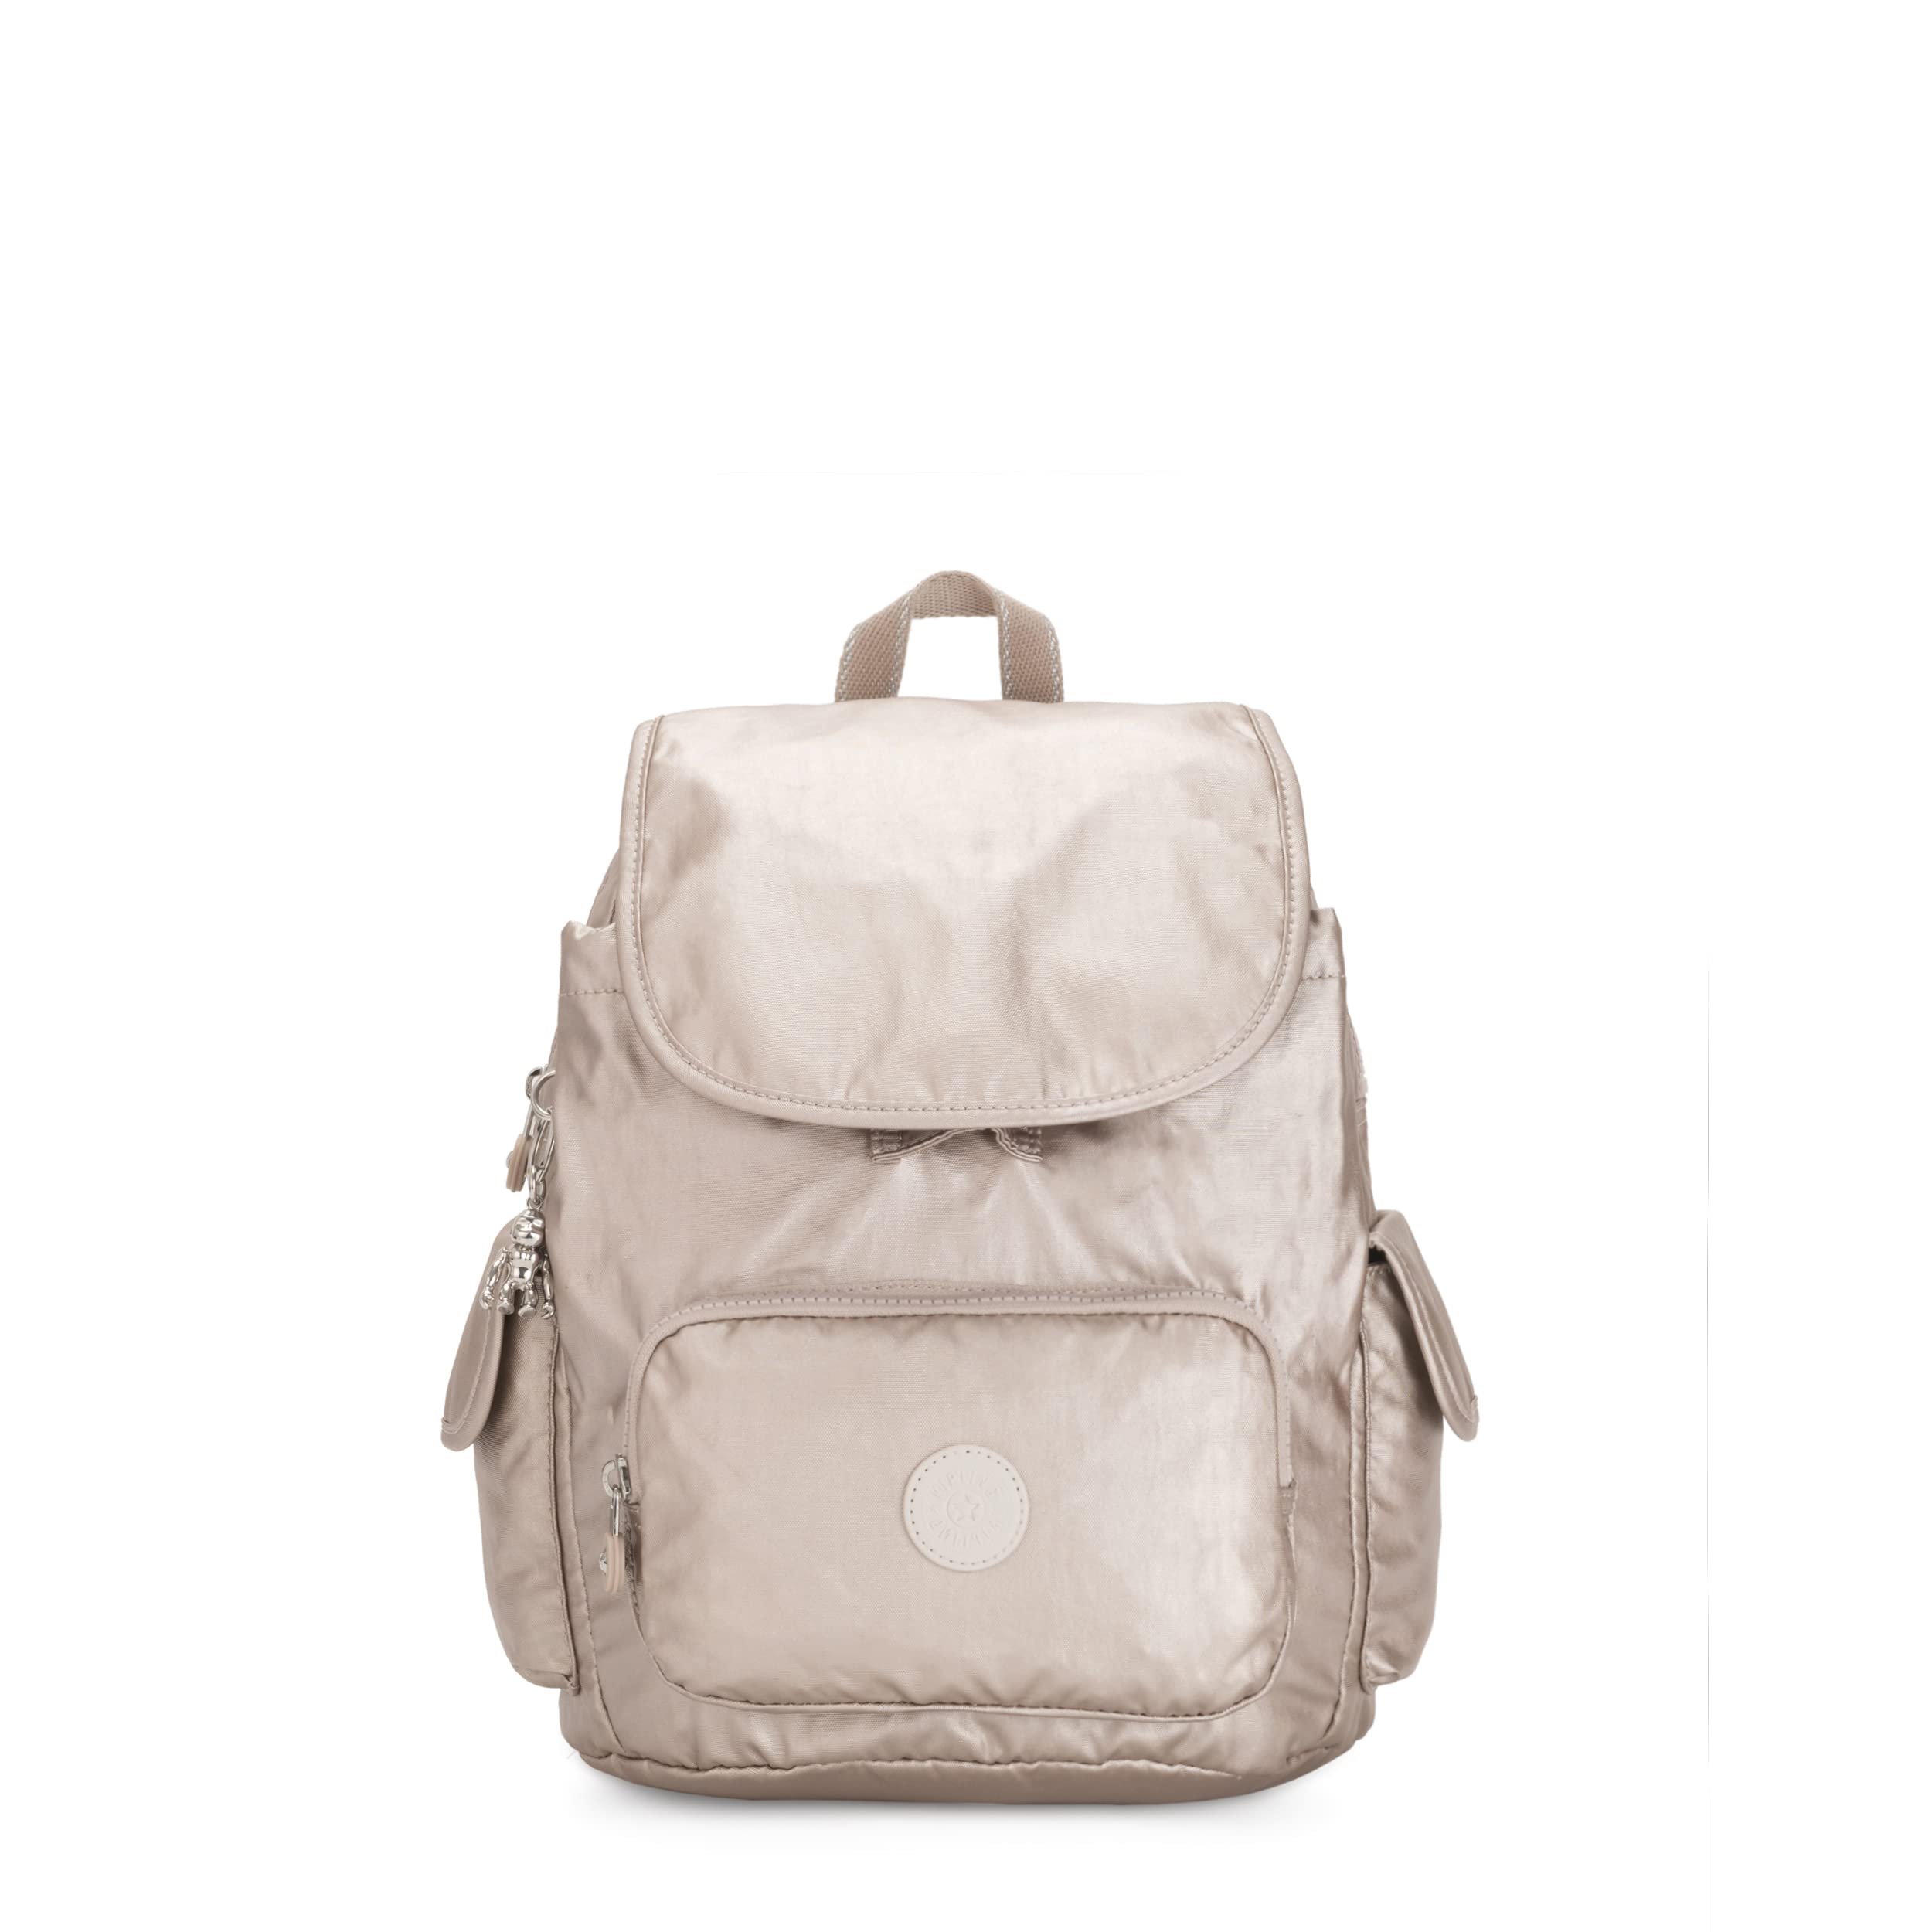 Kipling Women's City Pack Small Backpack, Lightweight Versatile Daypack, Bag, Metallic Glow, 10.75''L x 13.25''H x 7.5''D